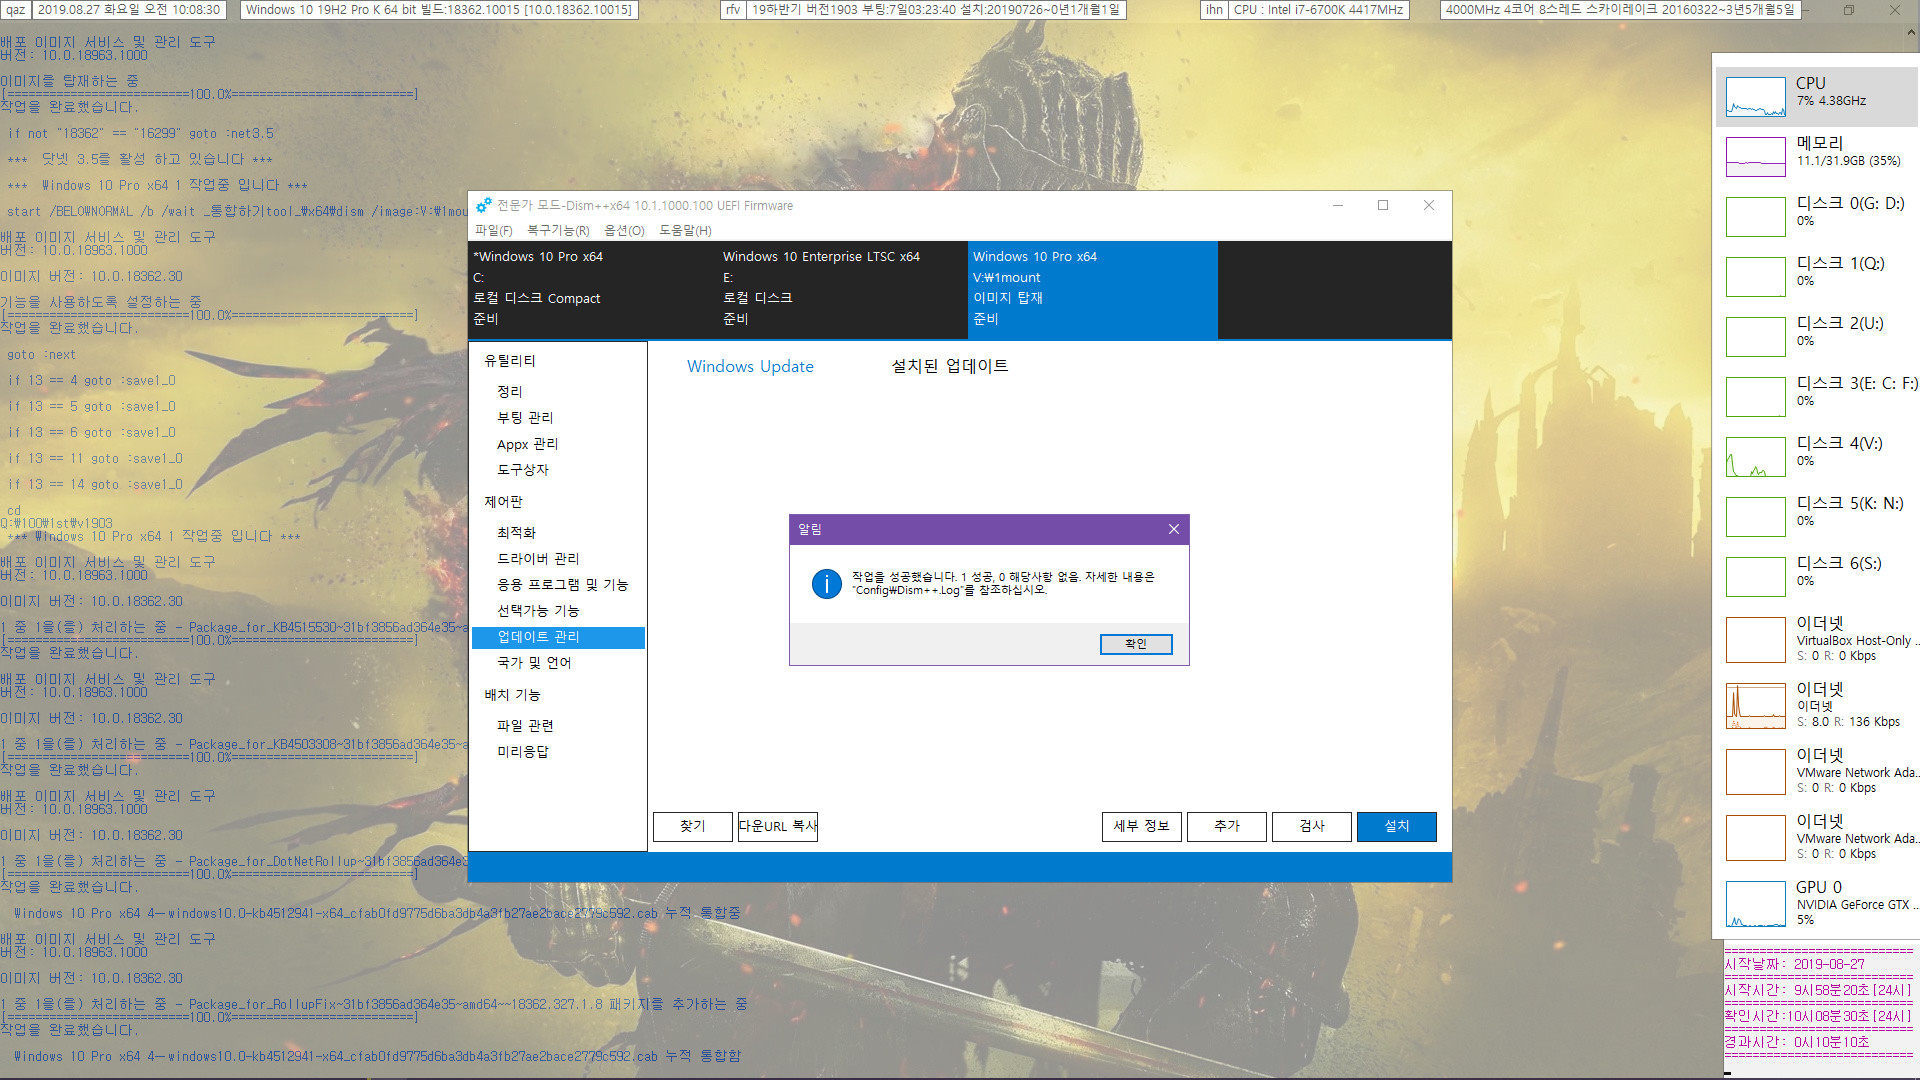 Windows 10 버전 1909 업데이트 KB4517245 (OS 빌드 18363.327) [2019-08-26 일자] 릴리스 프리뷰 나왔네요 - 버전과 빌드 표기만 바꾸는 업데이트 - 통합중 입니다 - install.wim 2019-08-27_100831.jpg